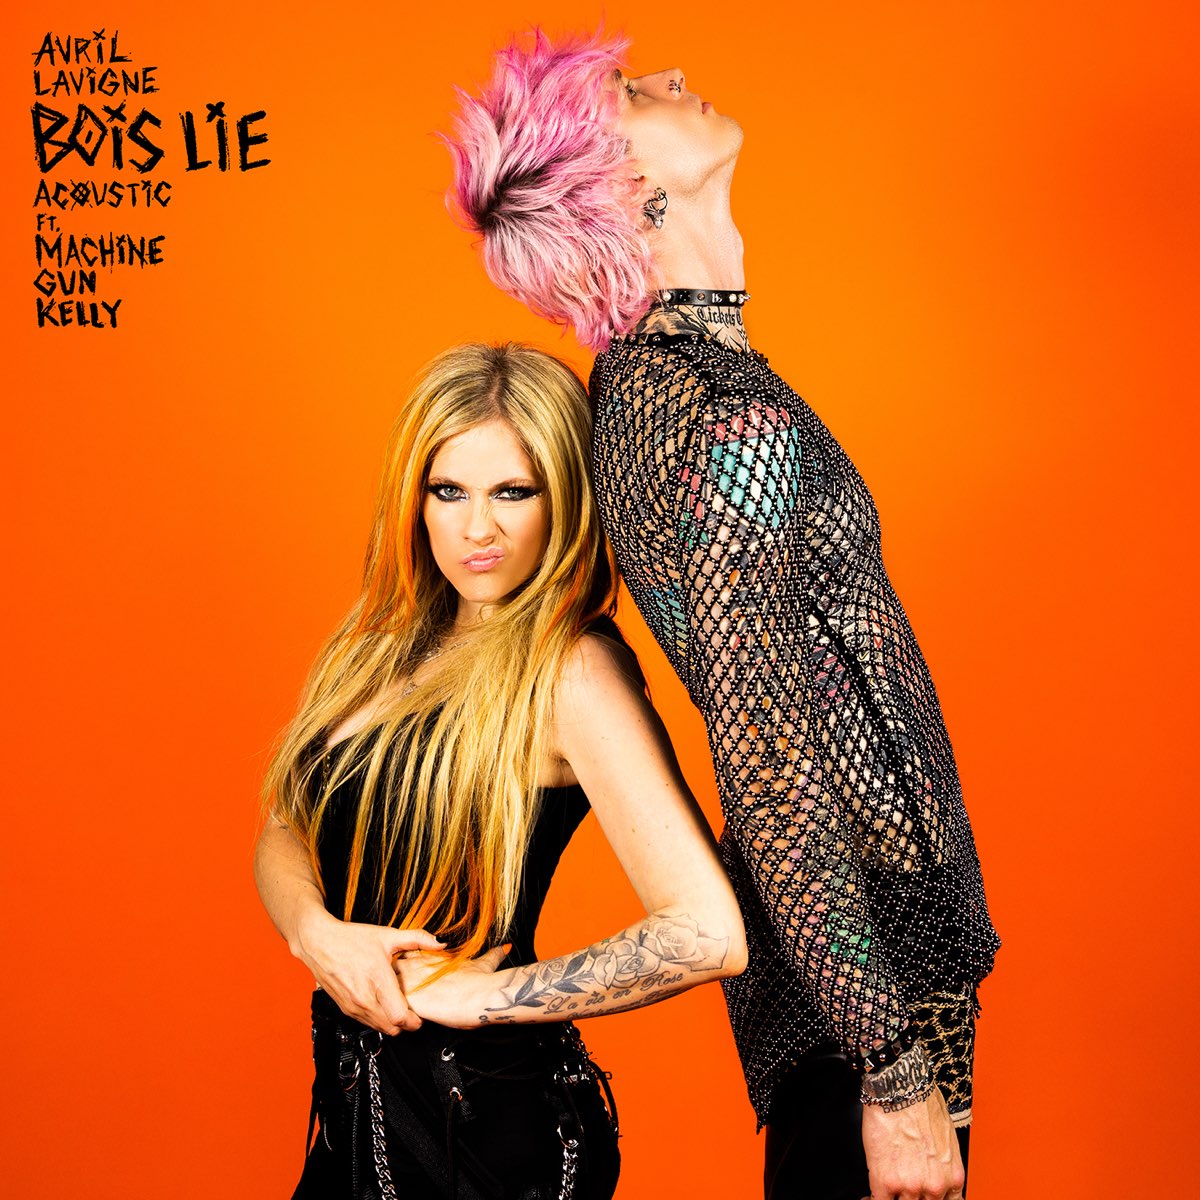 ‎Bois Lie (feat. Machine Gun Kelly) [Acoustic] Single by Avril